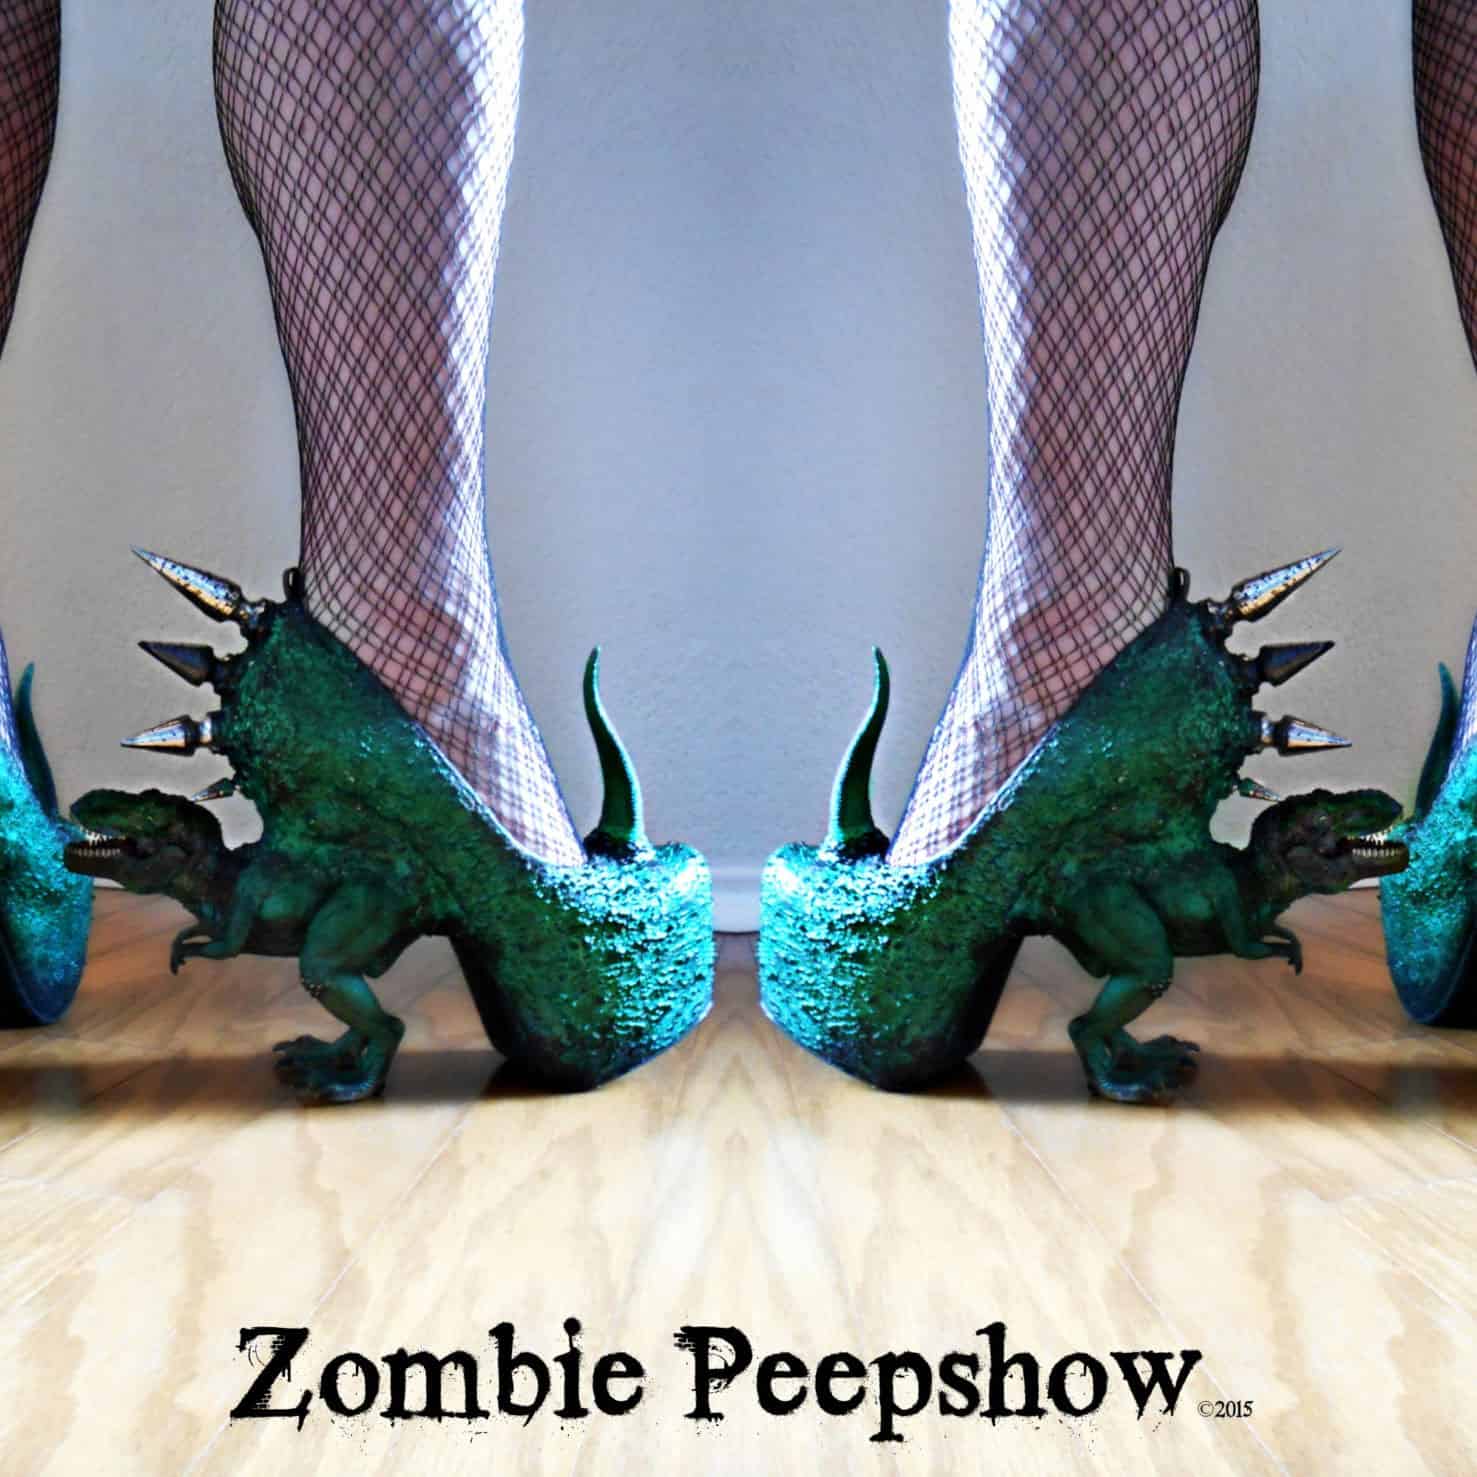 Zombie Peepshow T-Rex Dinosaur Spike Heels Rocker Chic Shoes